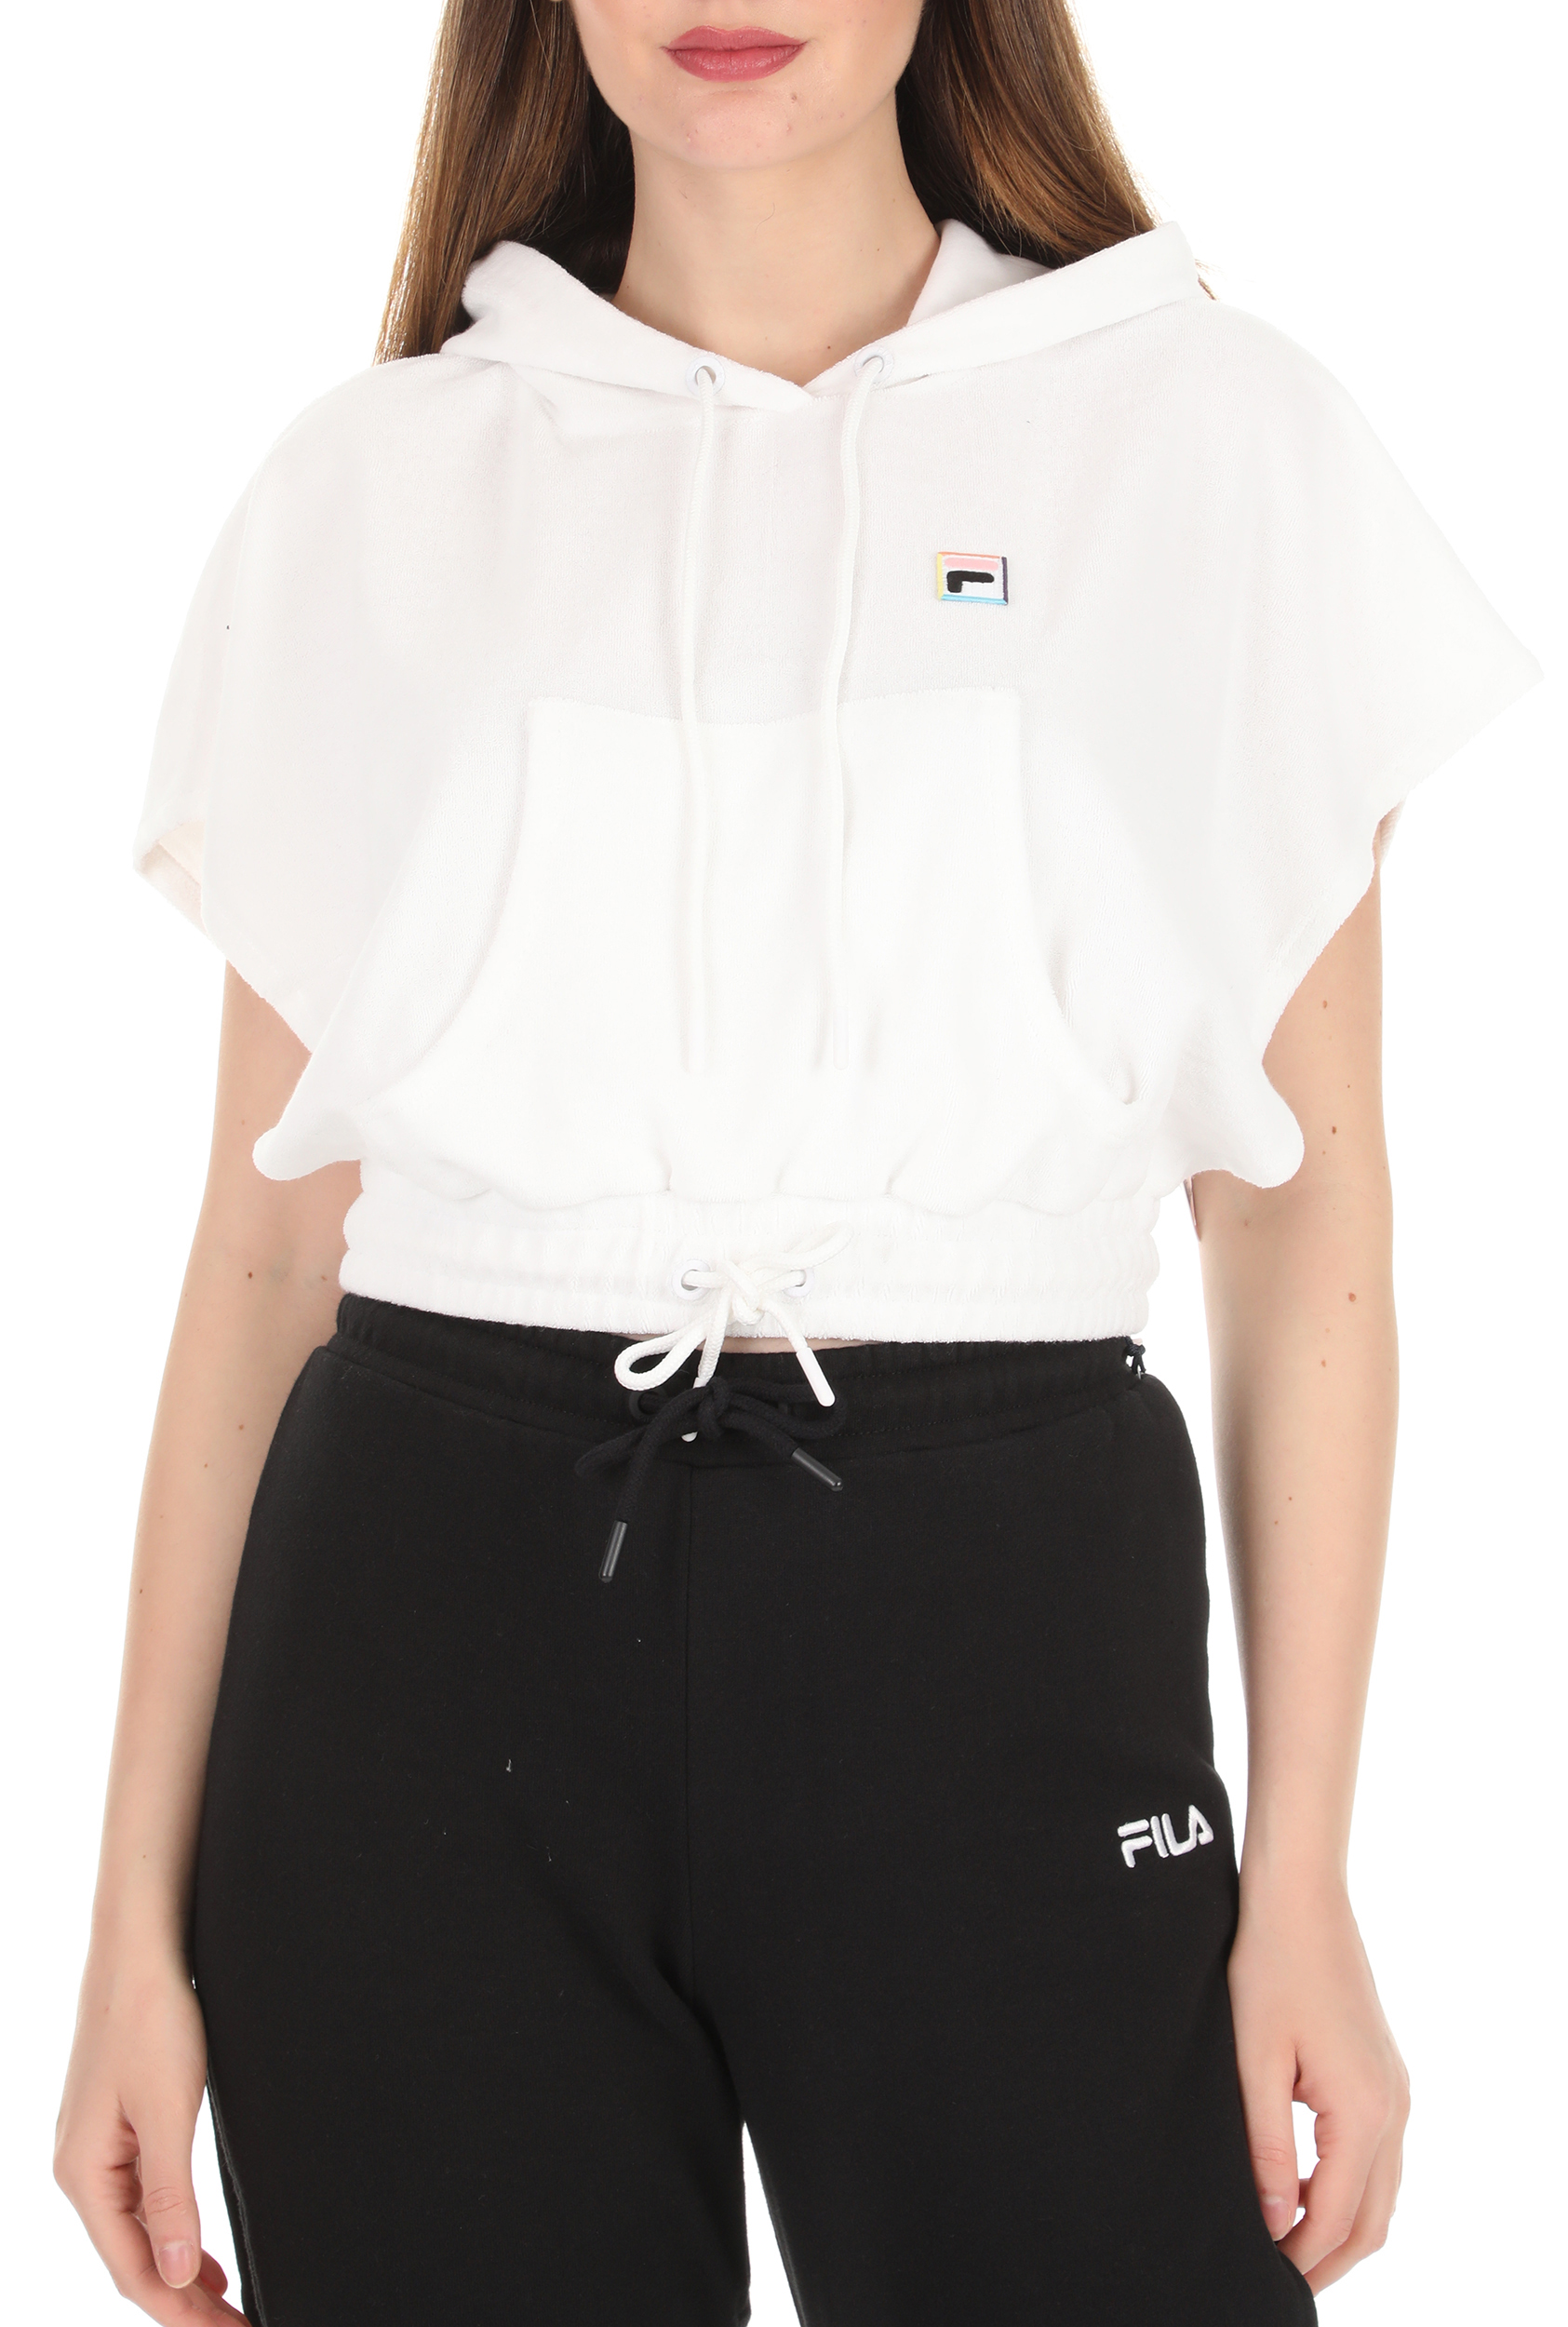 FILA – Γυναικεία φούτερ μπλούζα FILA CLAIRE CROP λευκή 1783300.0-0091